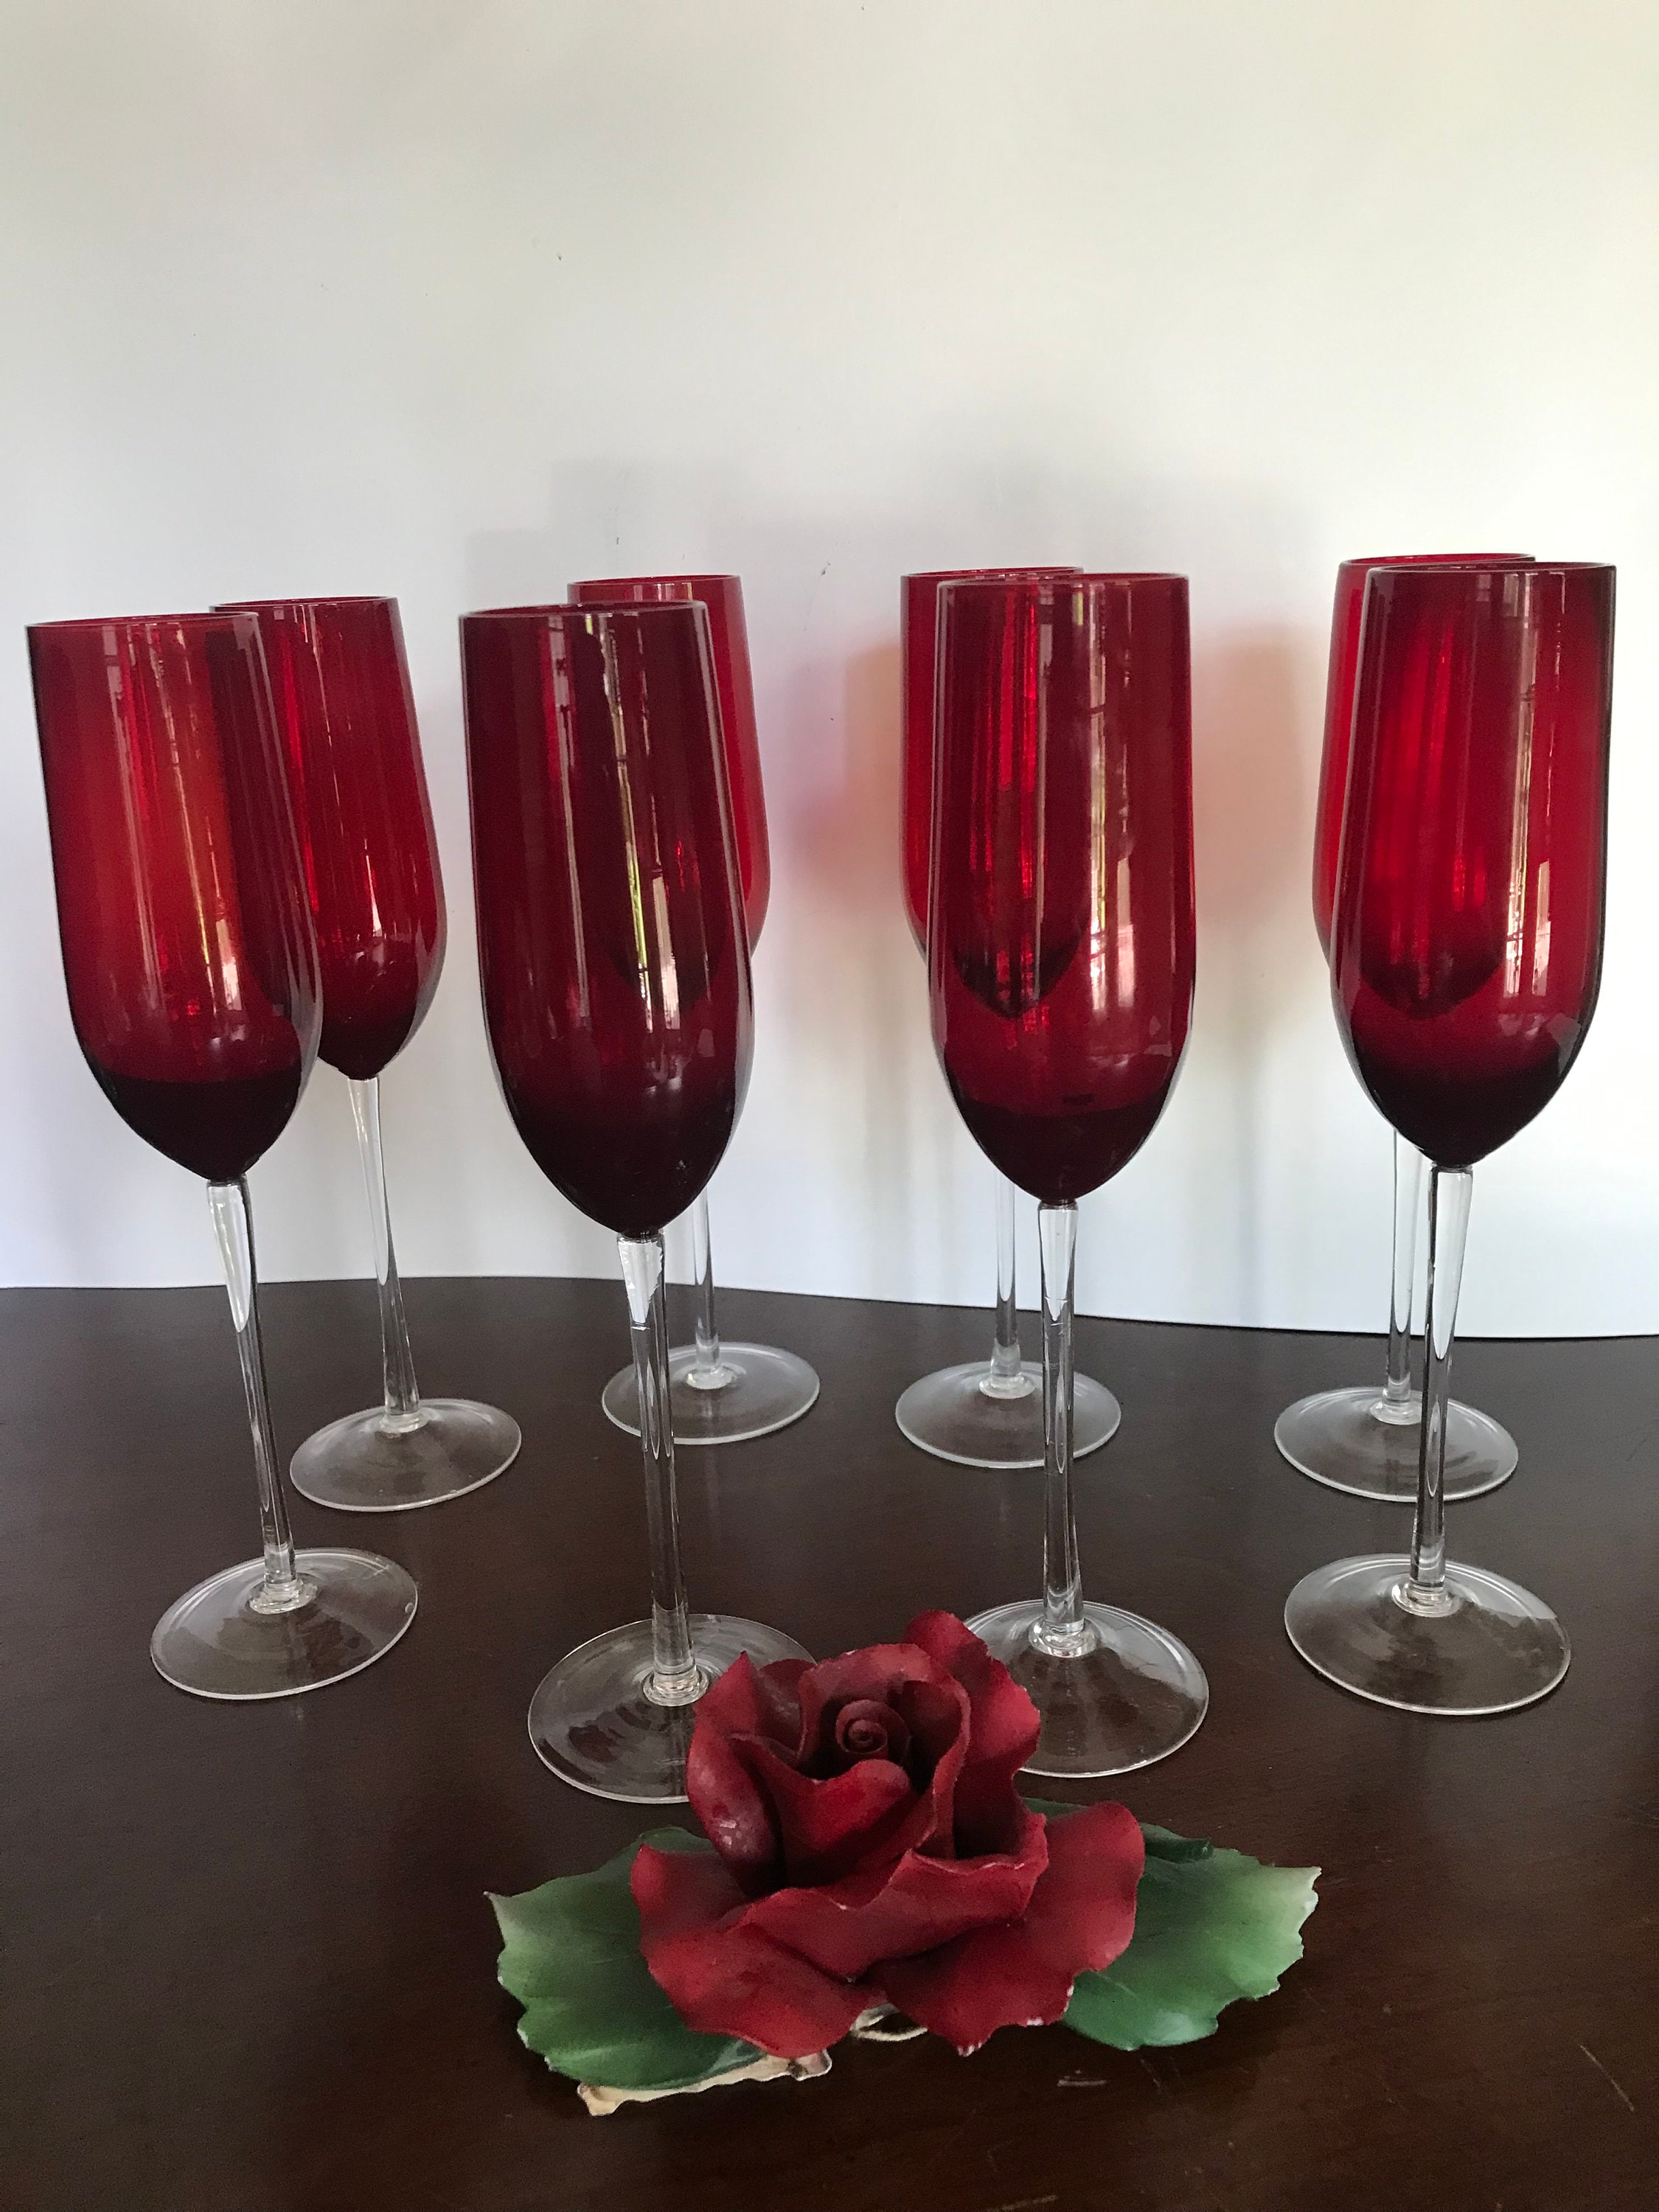 Ruby Murano Glass Venetian Wine Glass Stems Set of 8 - Ruby Lane